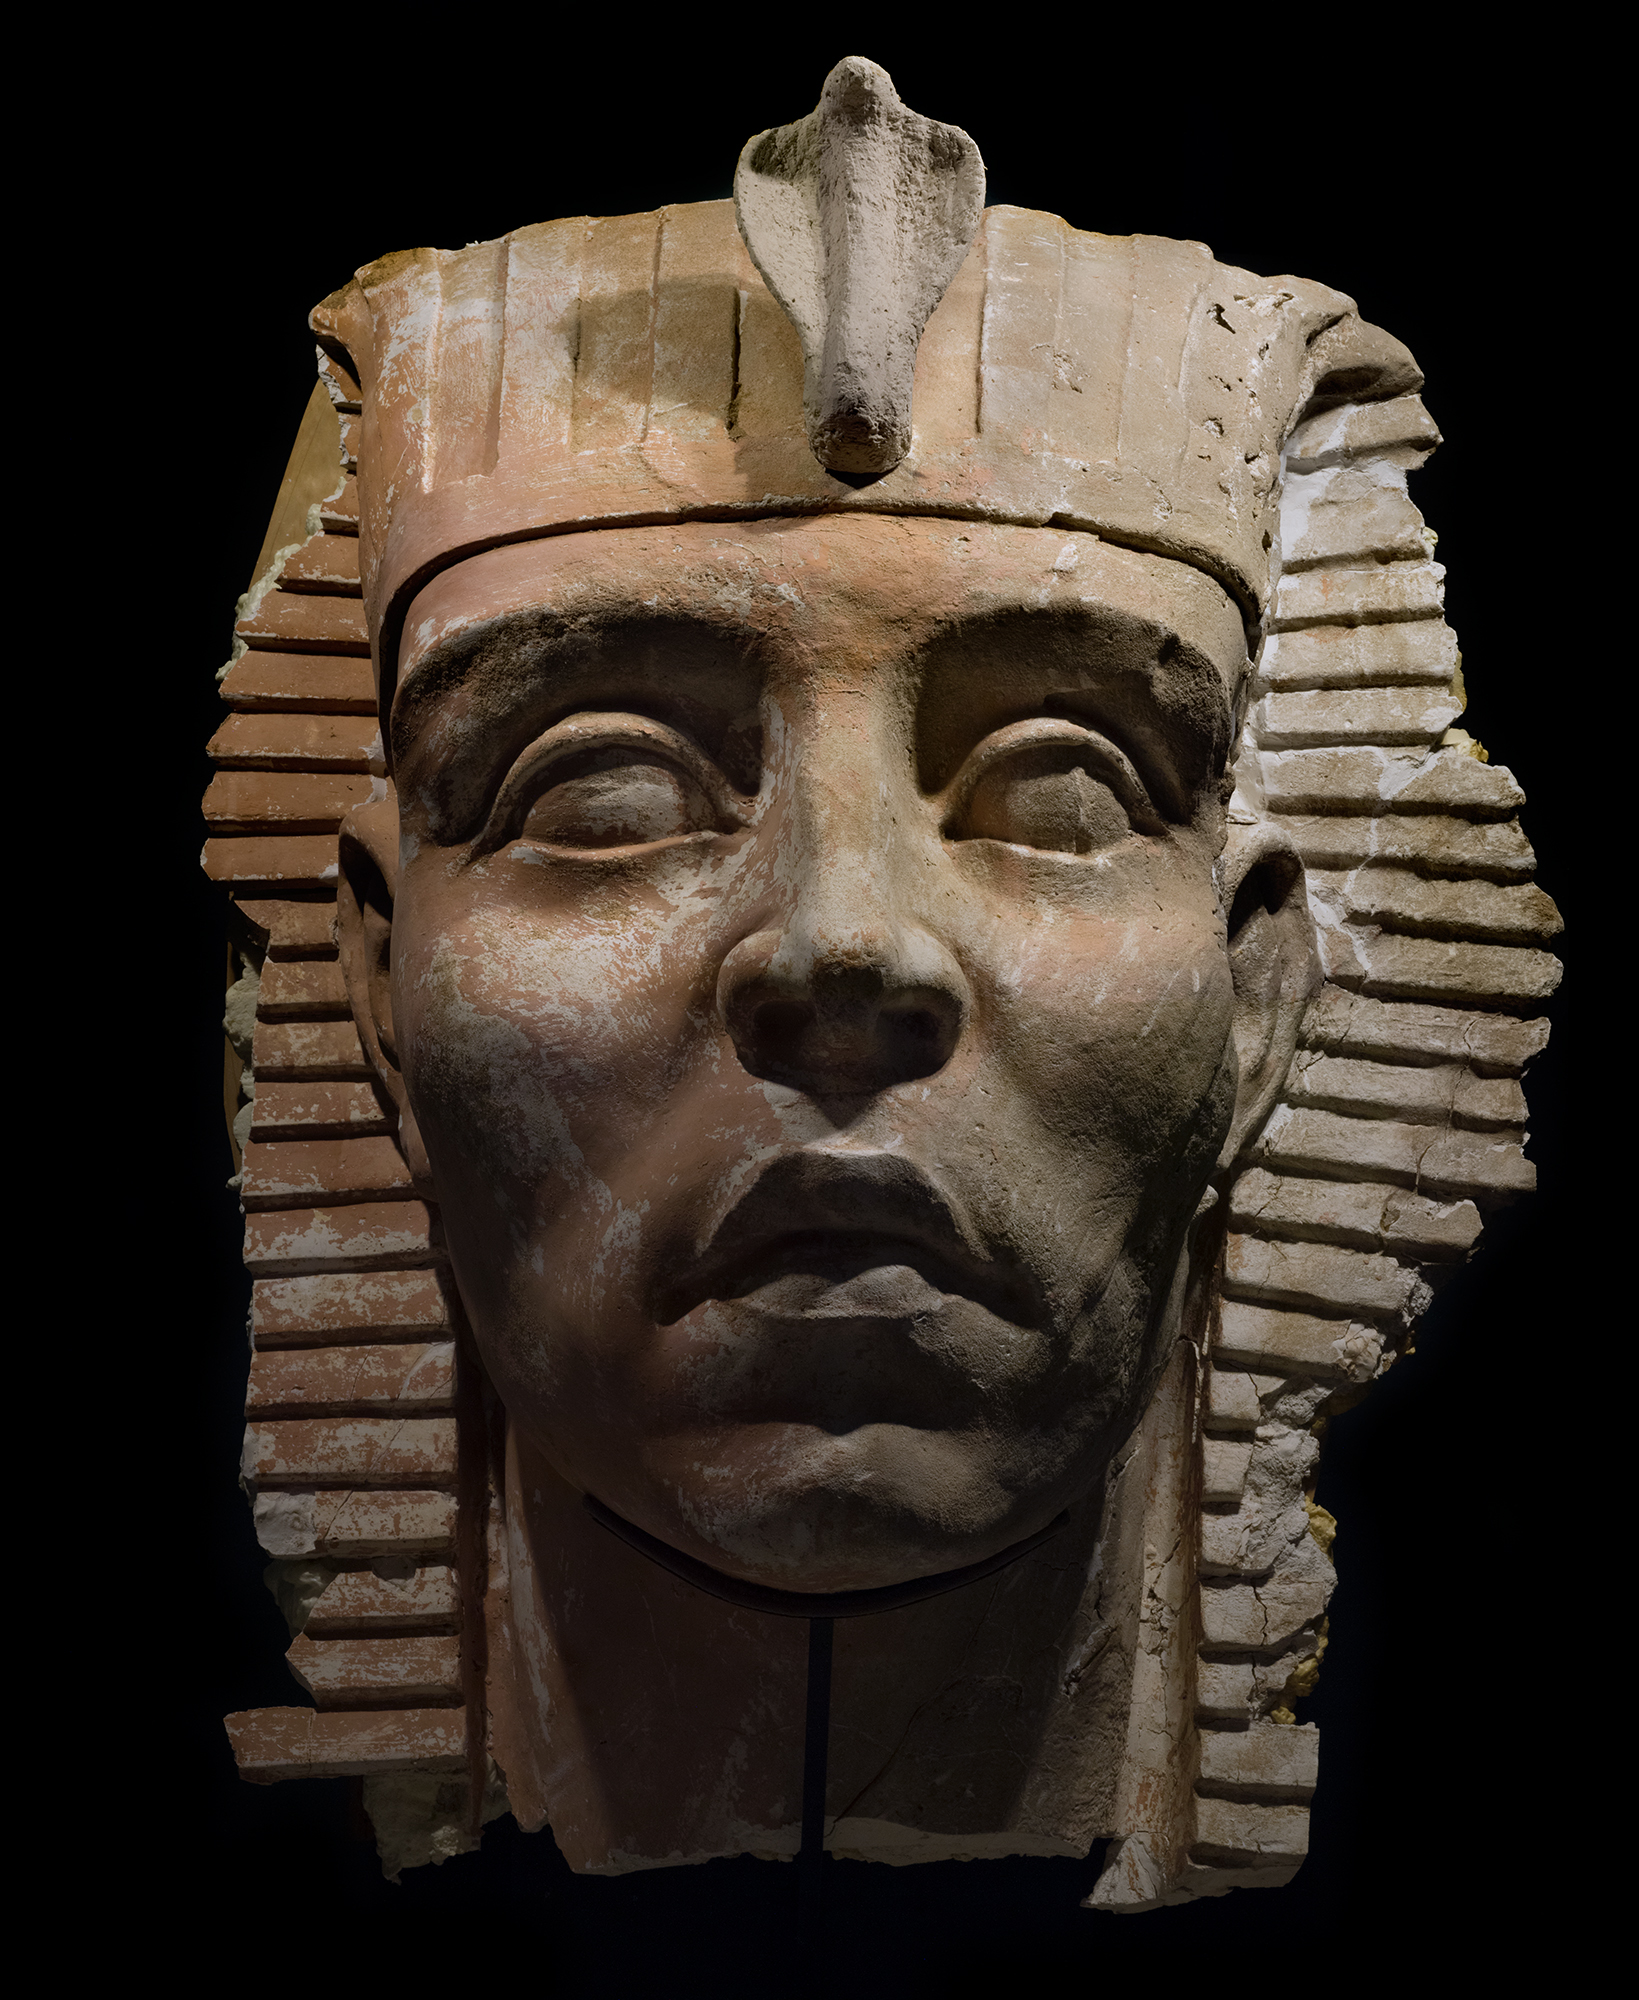 Sphinx Head at The Dune Center, Guadalupe, CA, 20" x 15", Archival Pigment Print, 2018